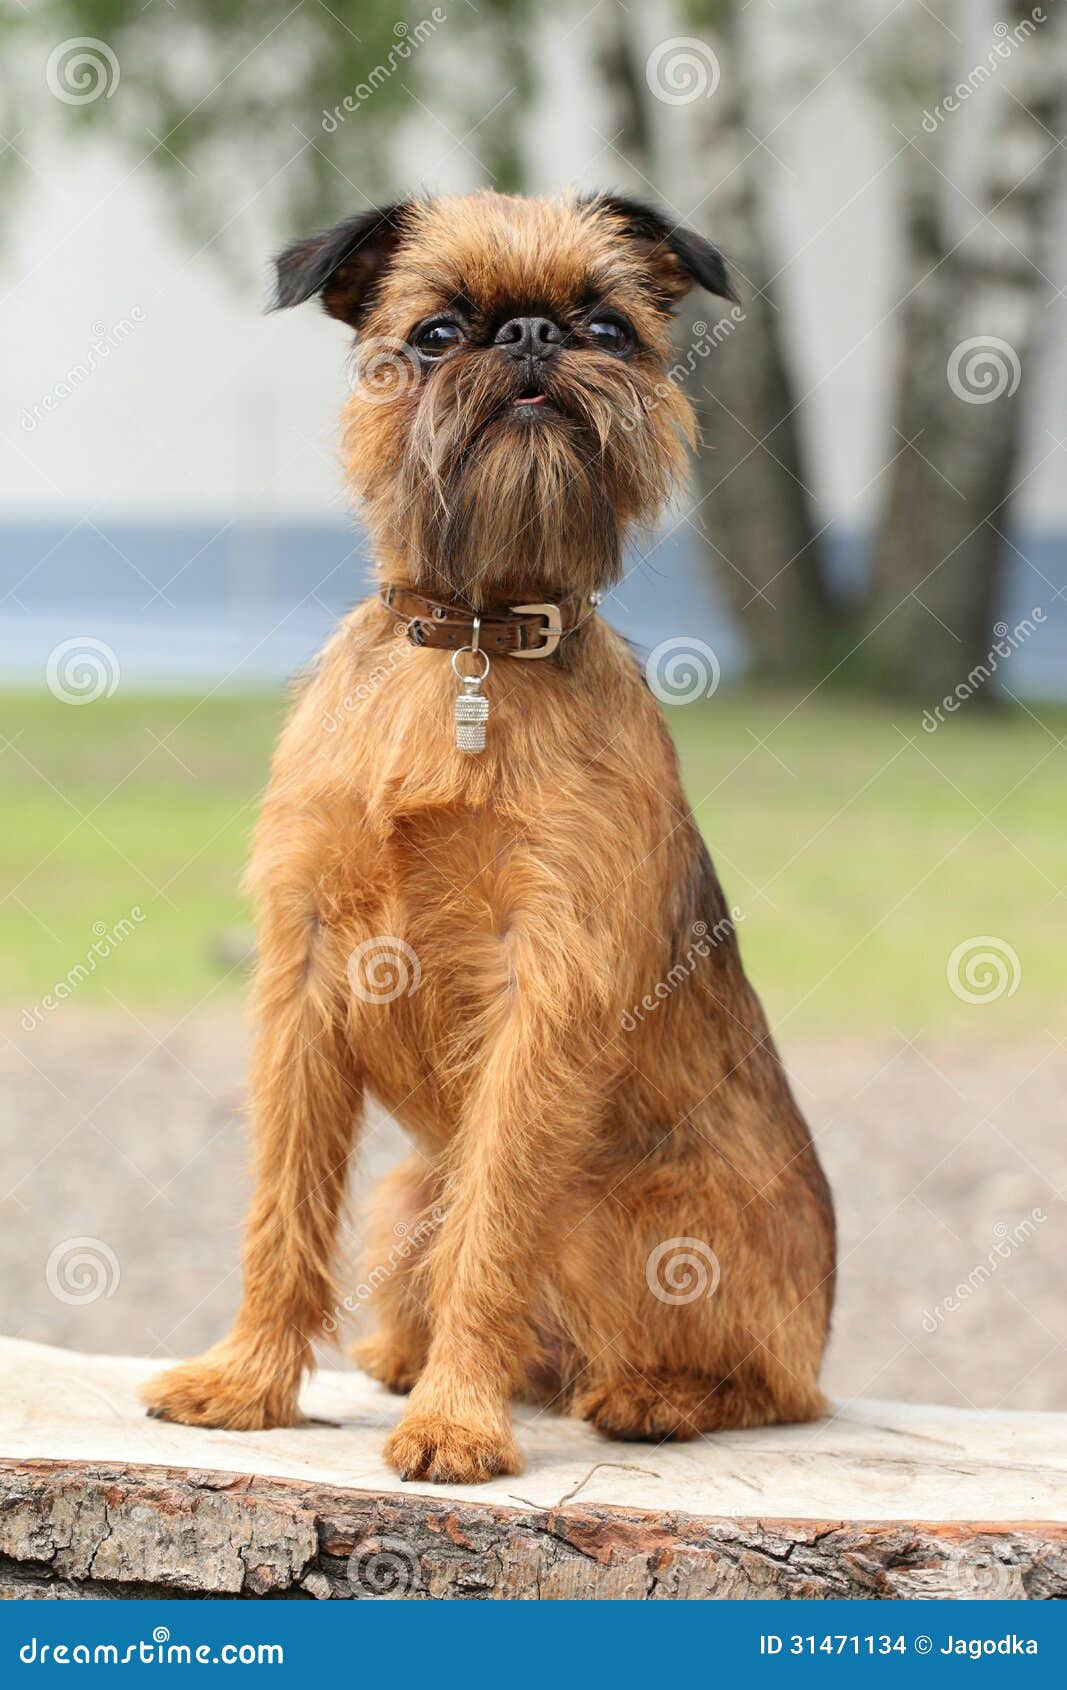 brussels griffon dog portrait on wooden bench